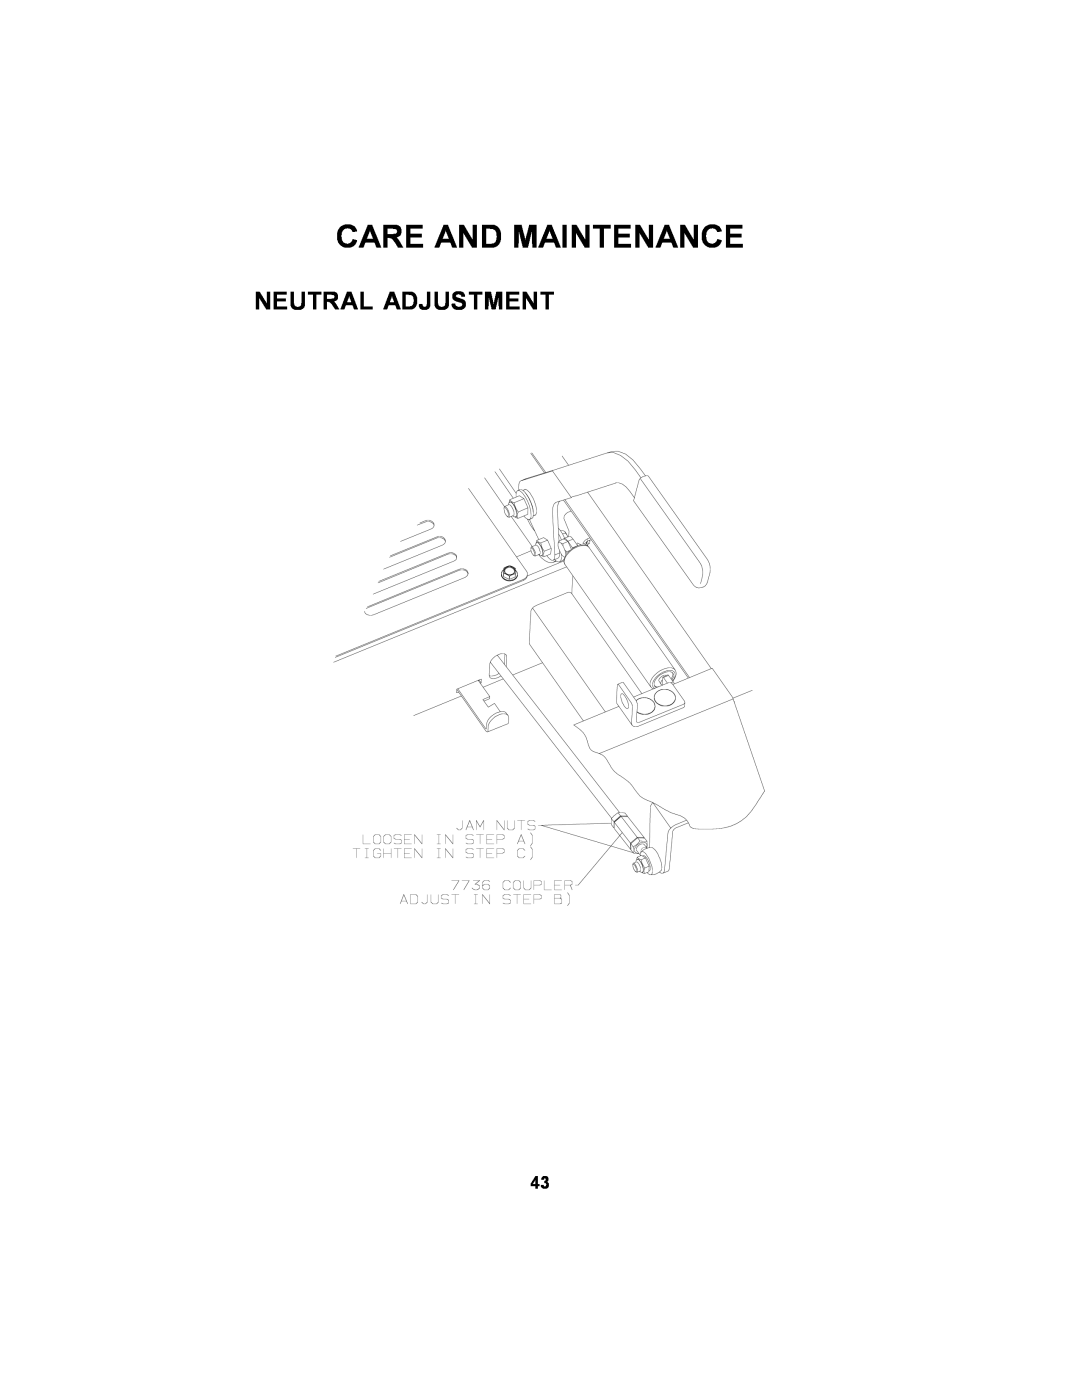 Dixon 36 manual Care And Maintenance, Neutral Adjustment 